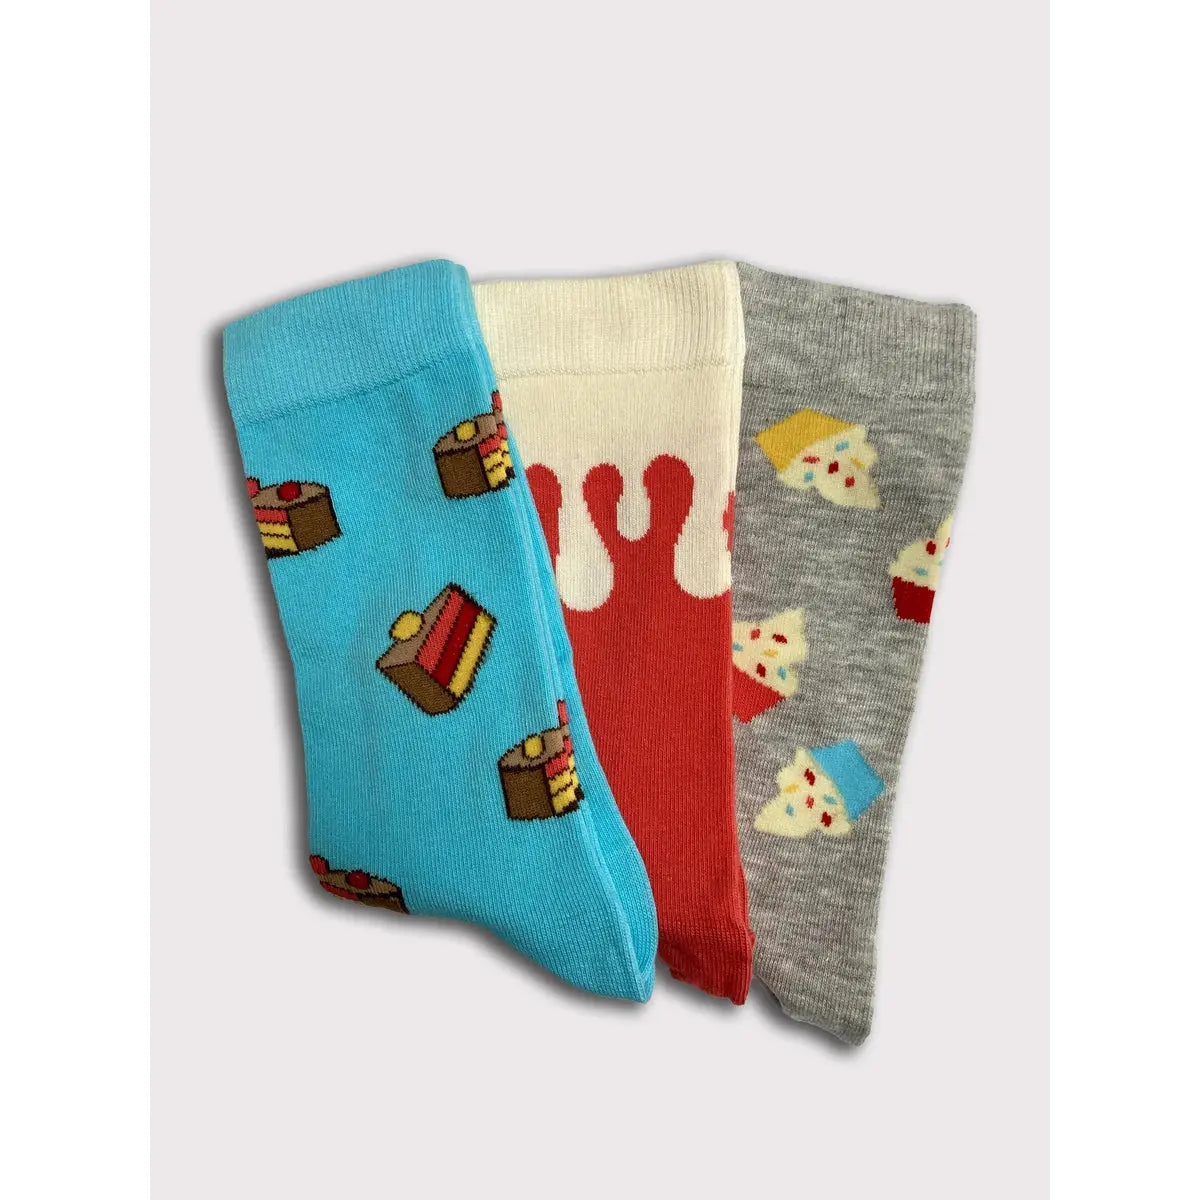 Boxt Socks - Socken mit Kuchen Motiven - 3 Paar